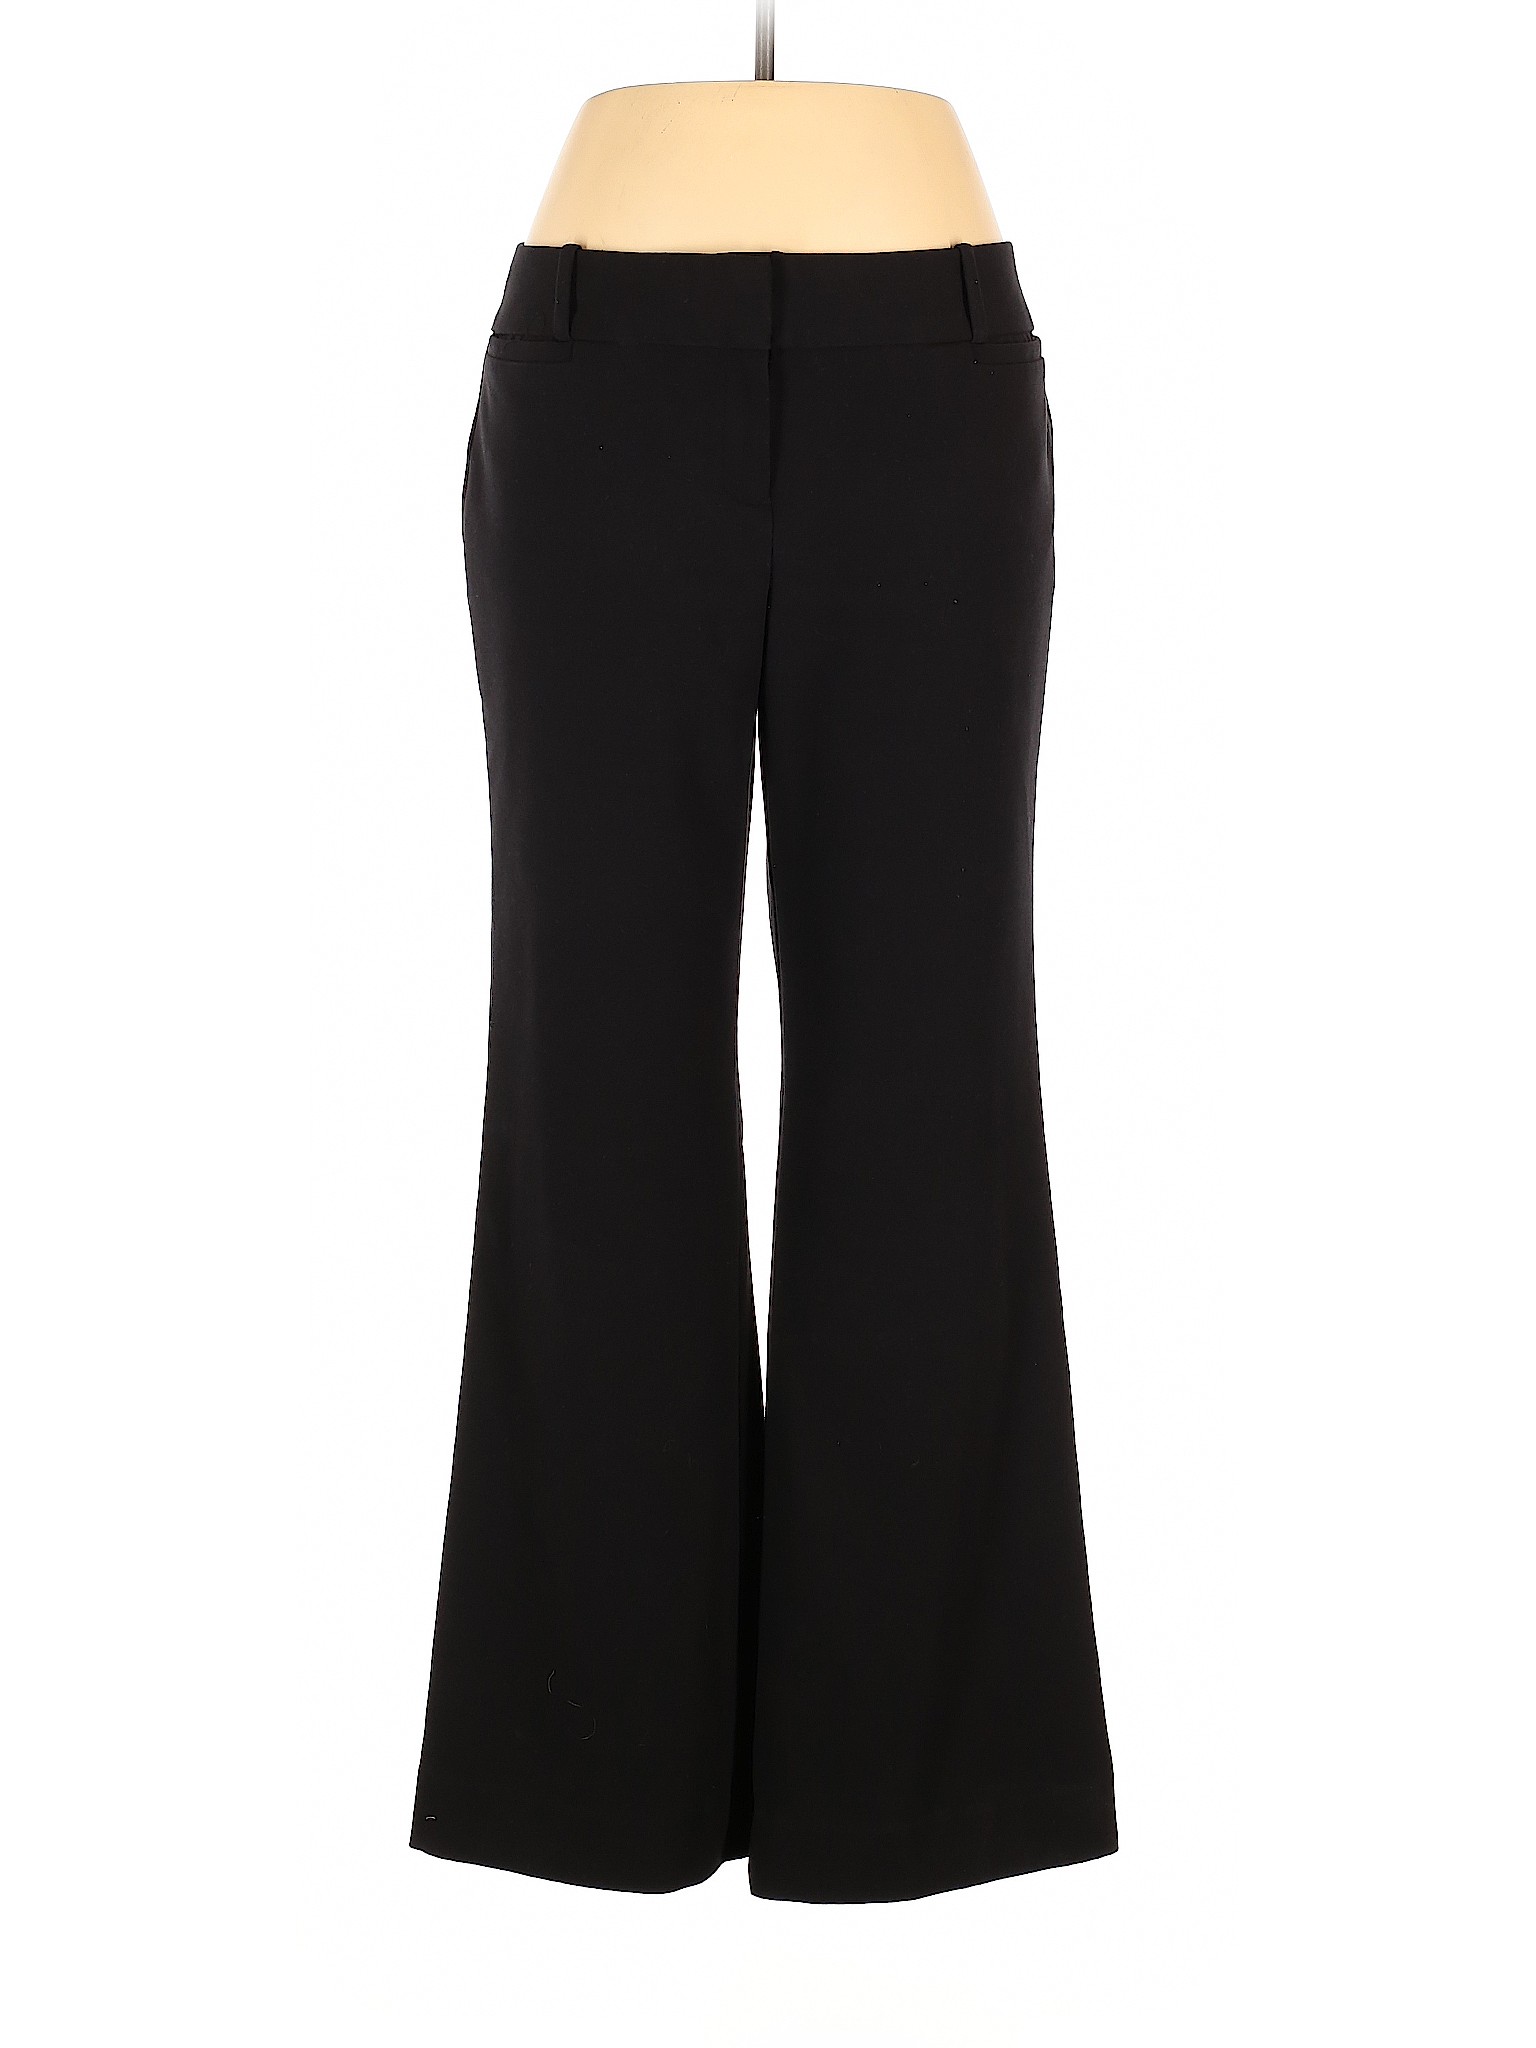 LTD Women Black Dress Pants 12 | eBay